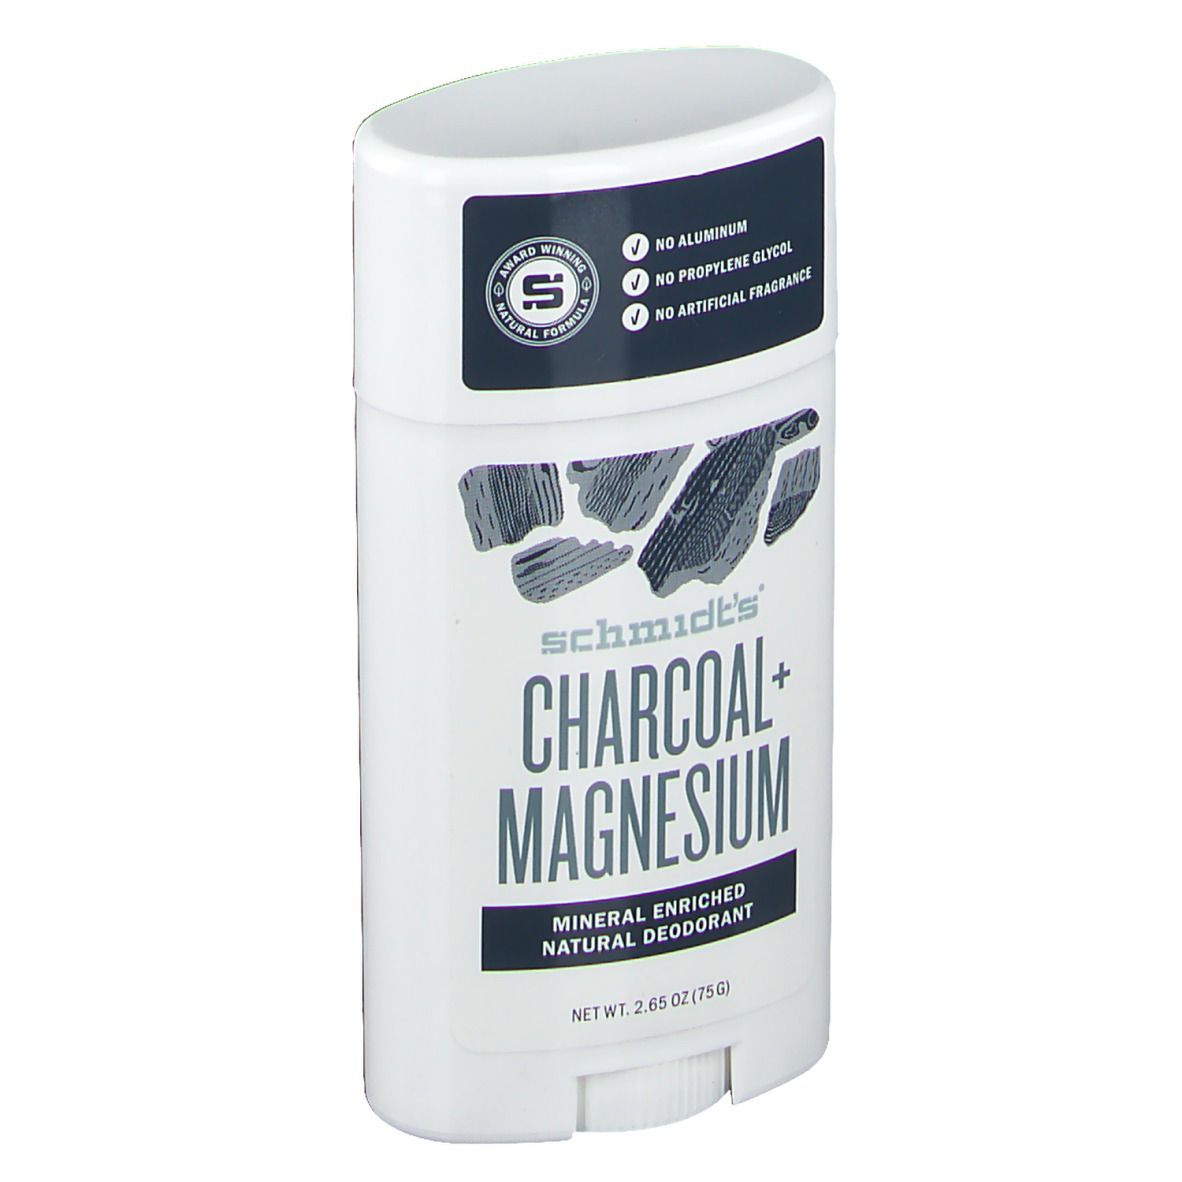 schmidts Charcoal + Magnesium Deodorant